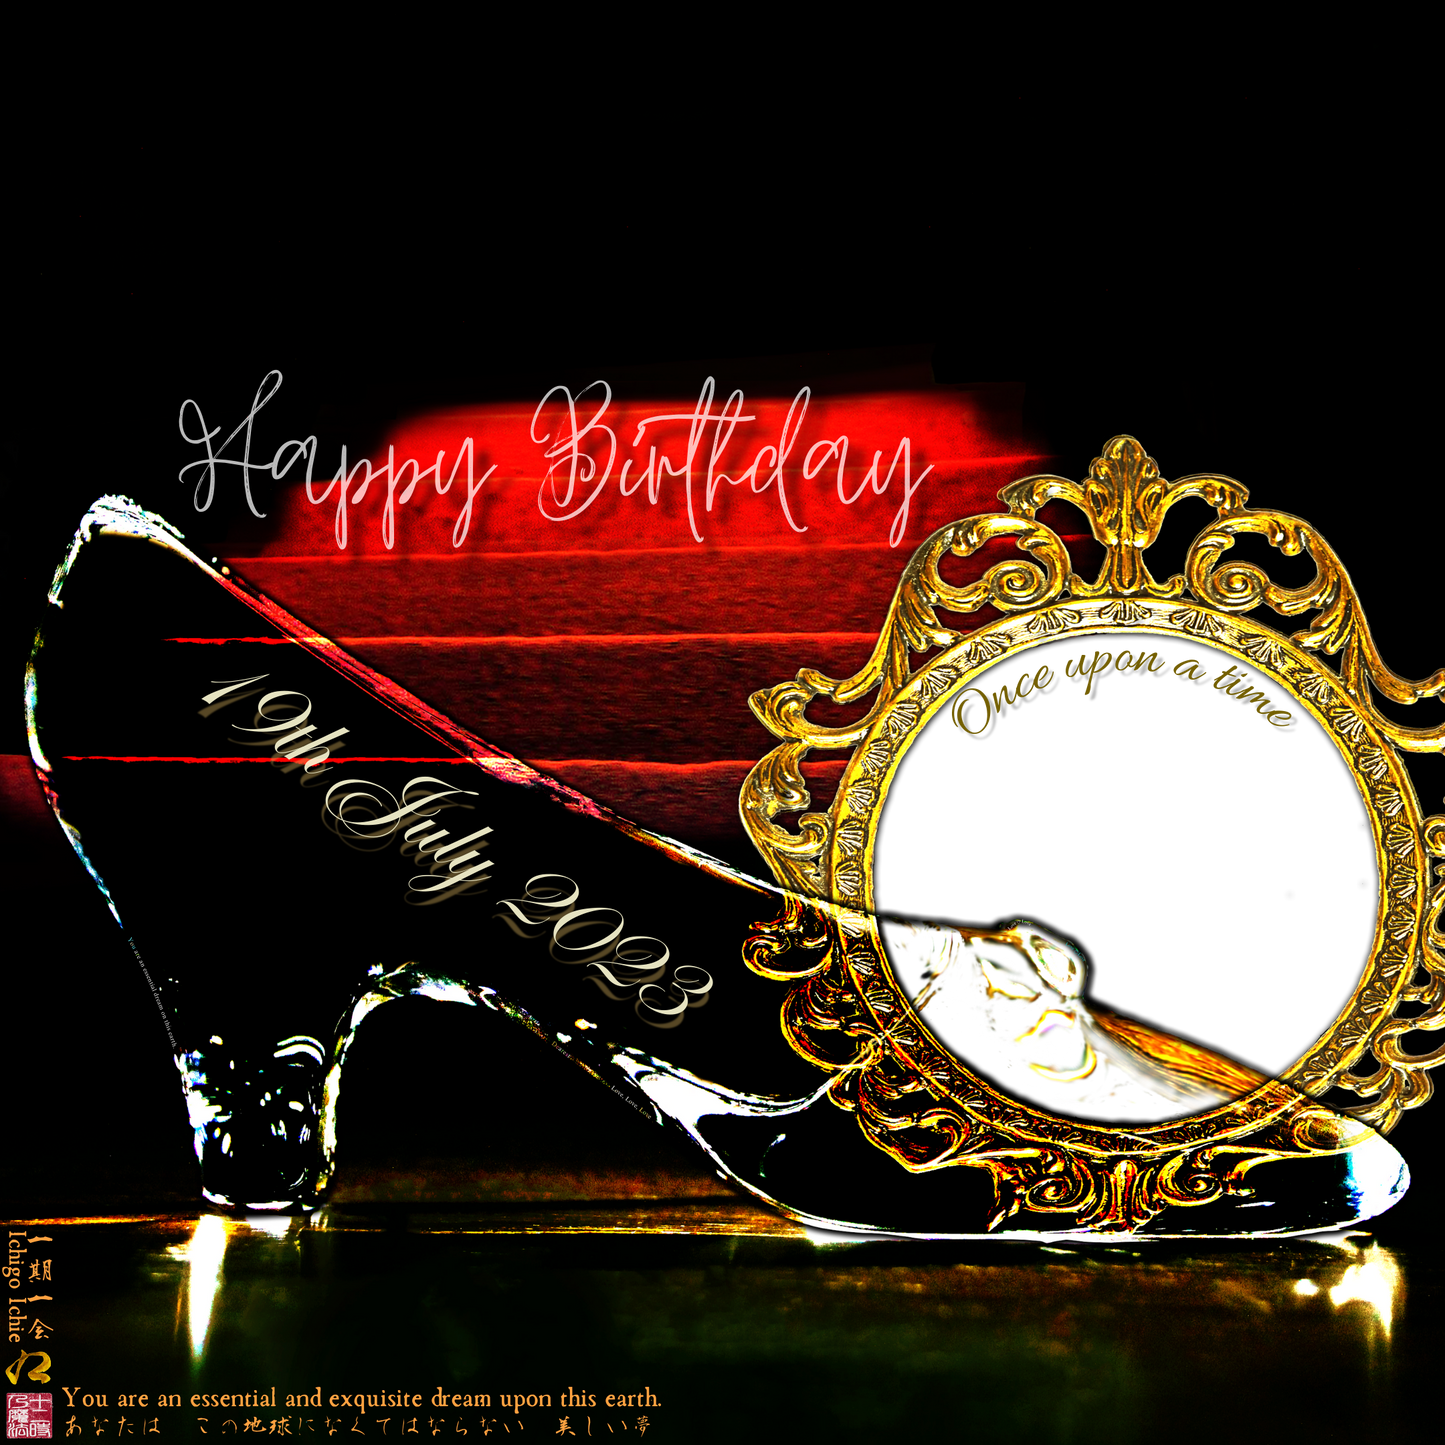 Happy Birthday Glass Slipper "Ichigo Ichie" 19th July 2023 the Right (1-of-1) NFT Art